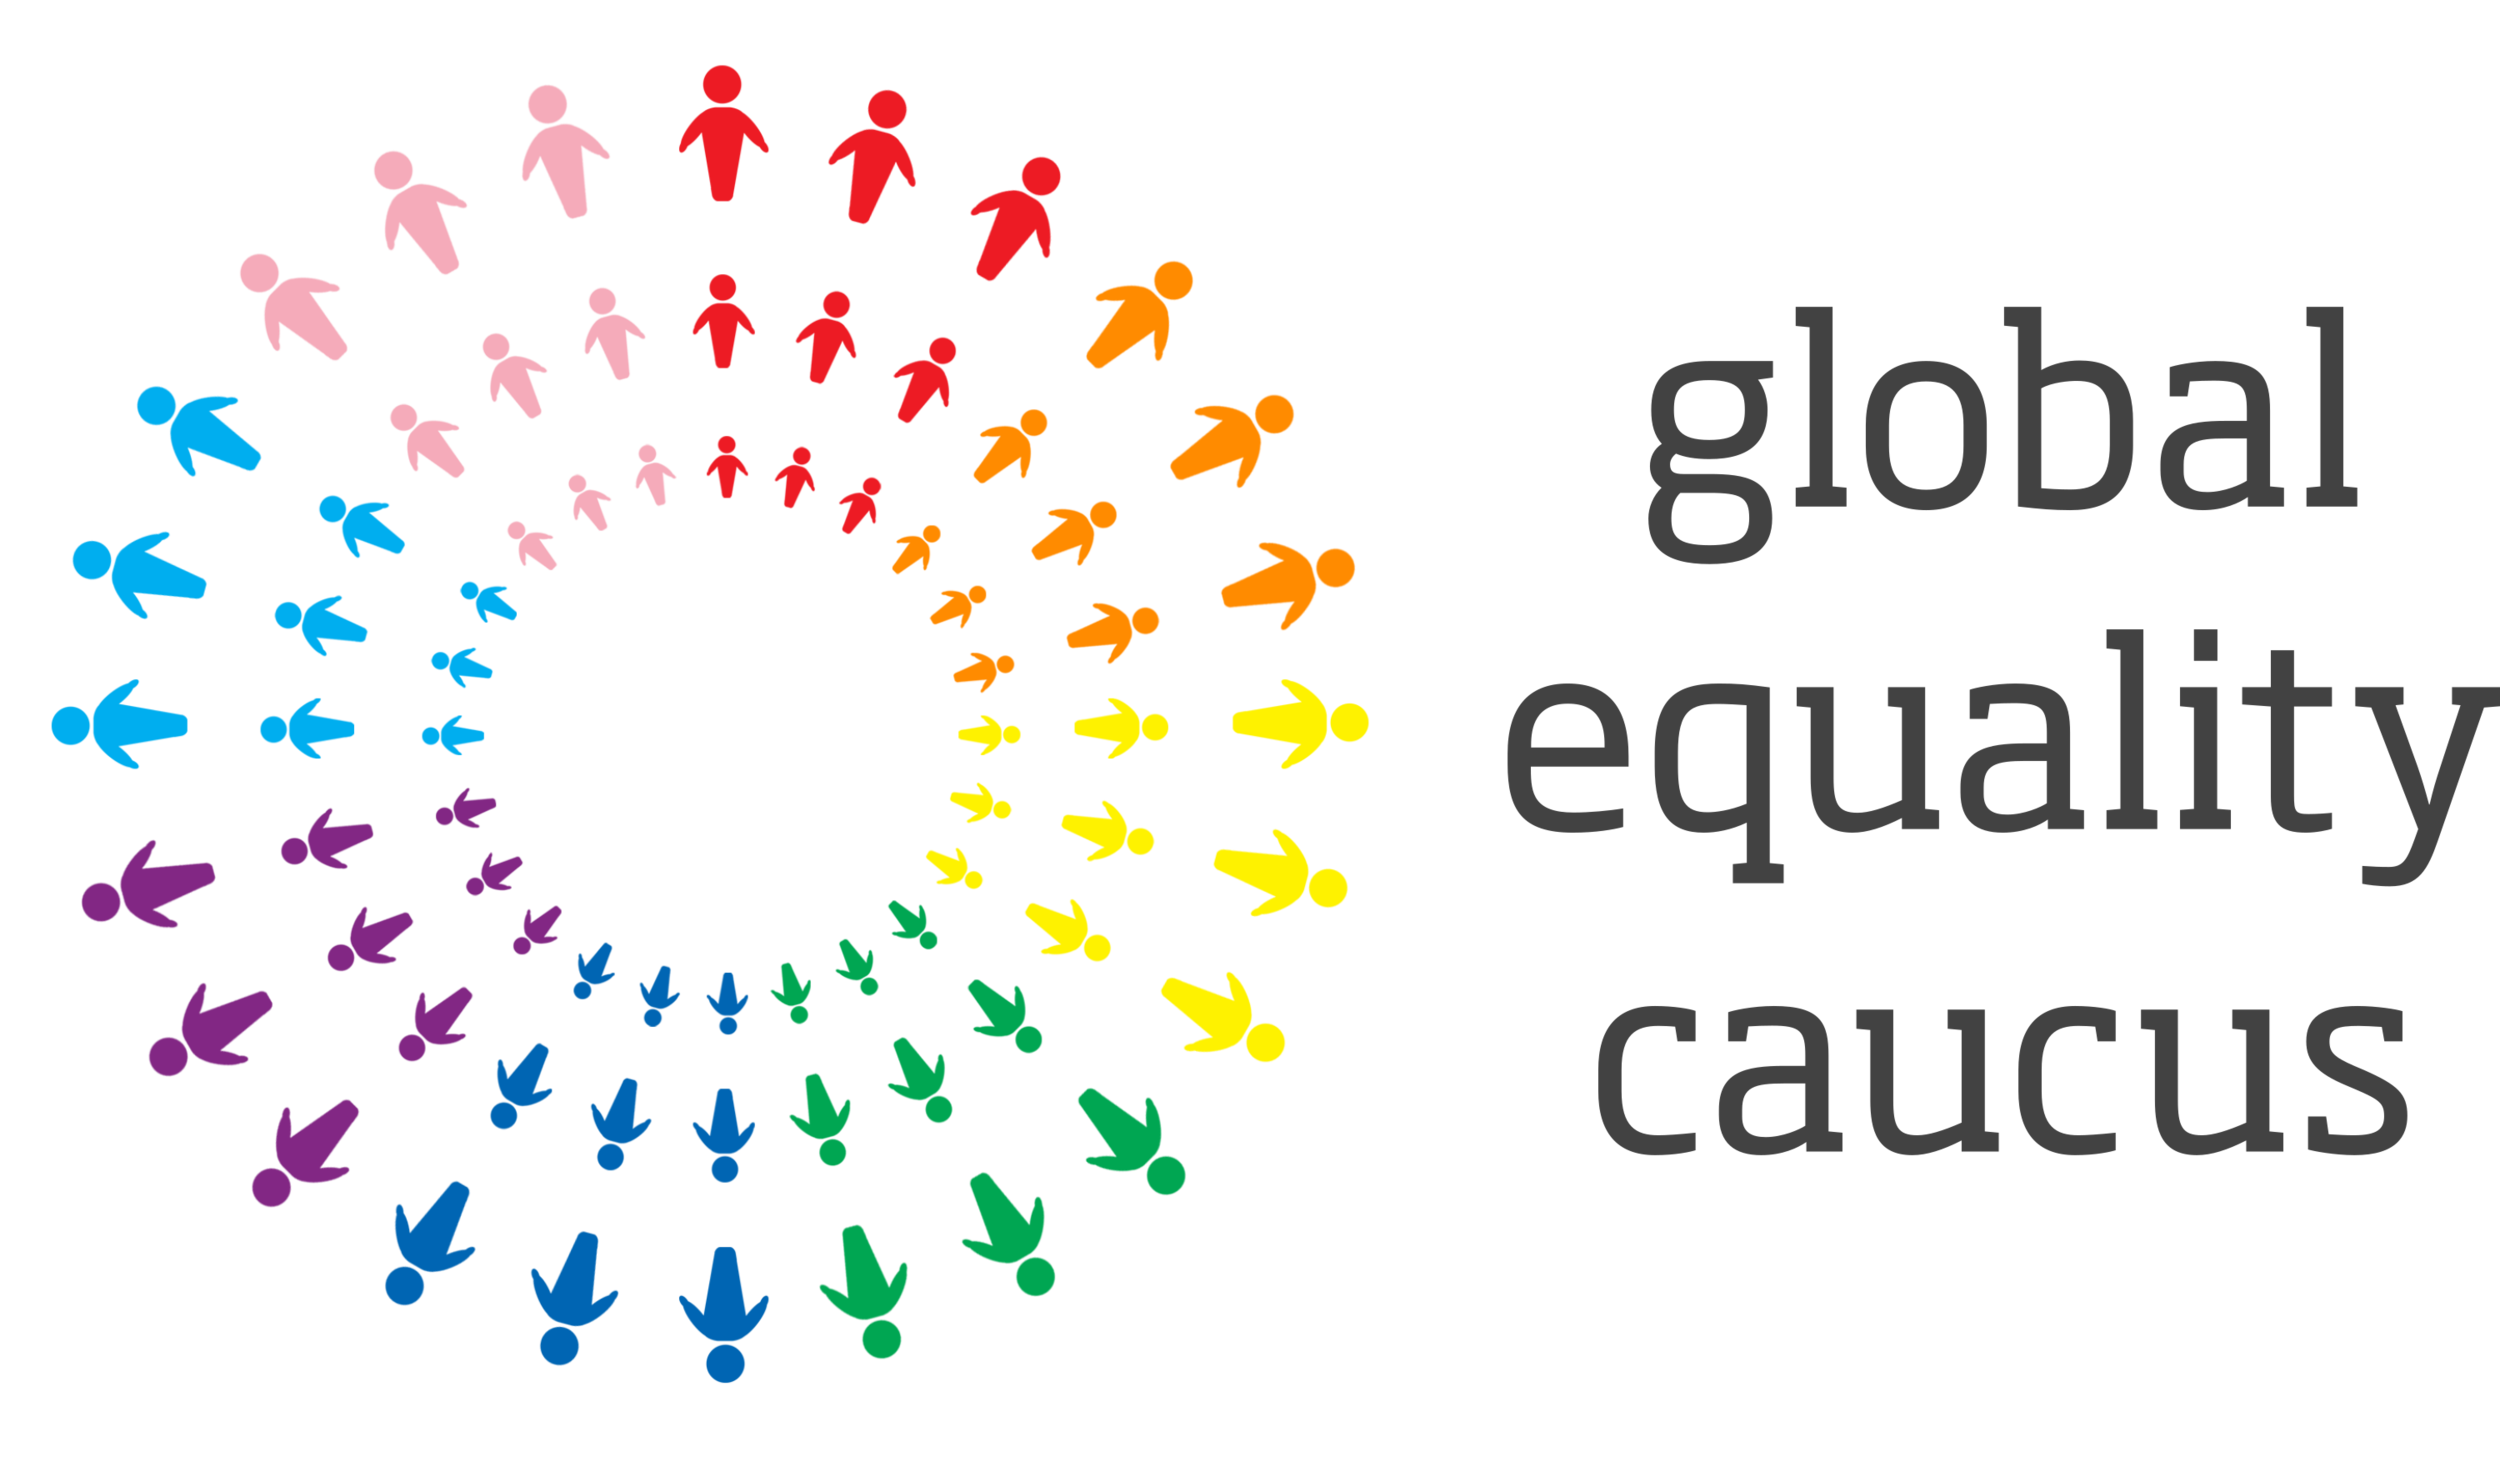 Global Equality Caucus